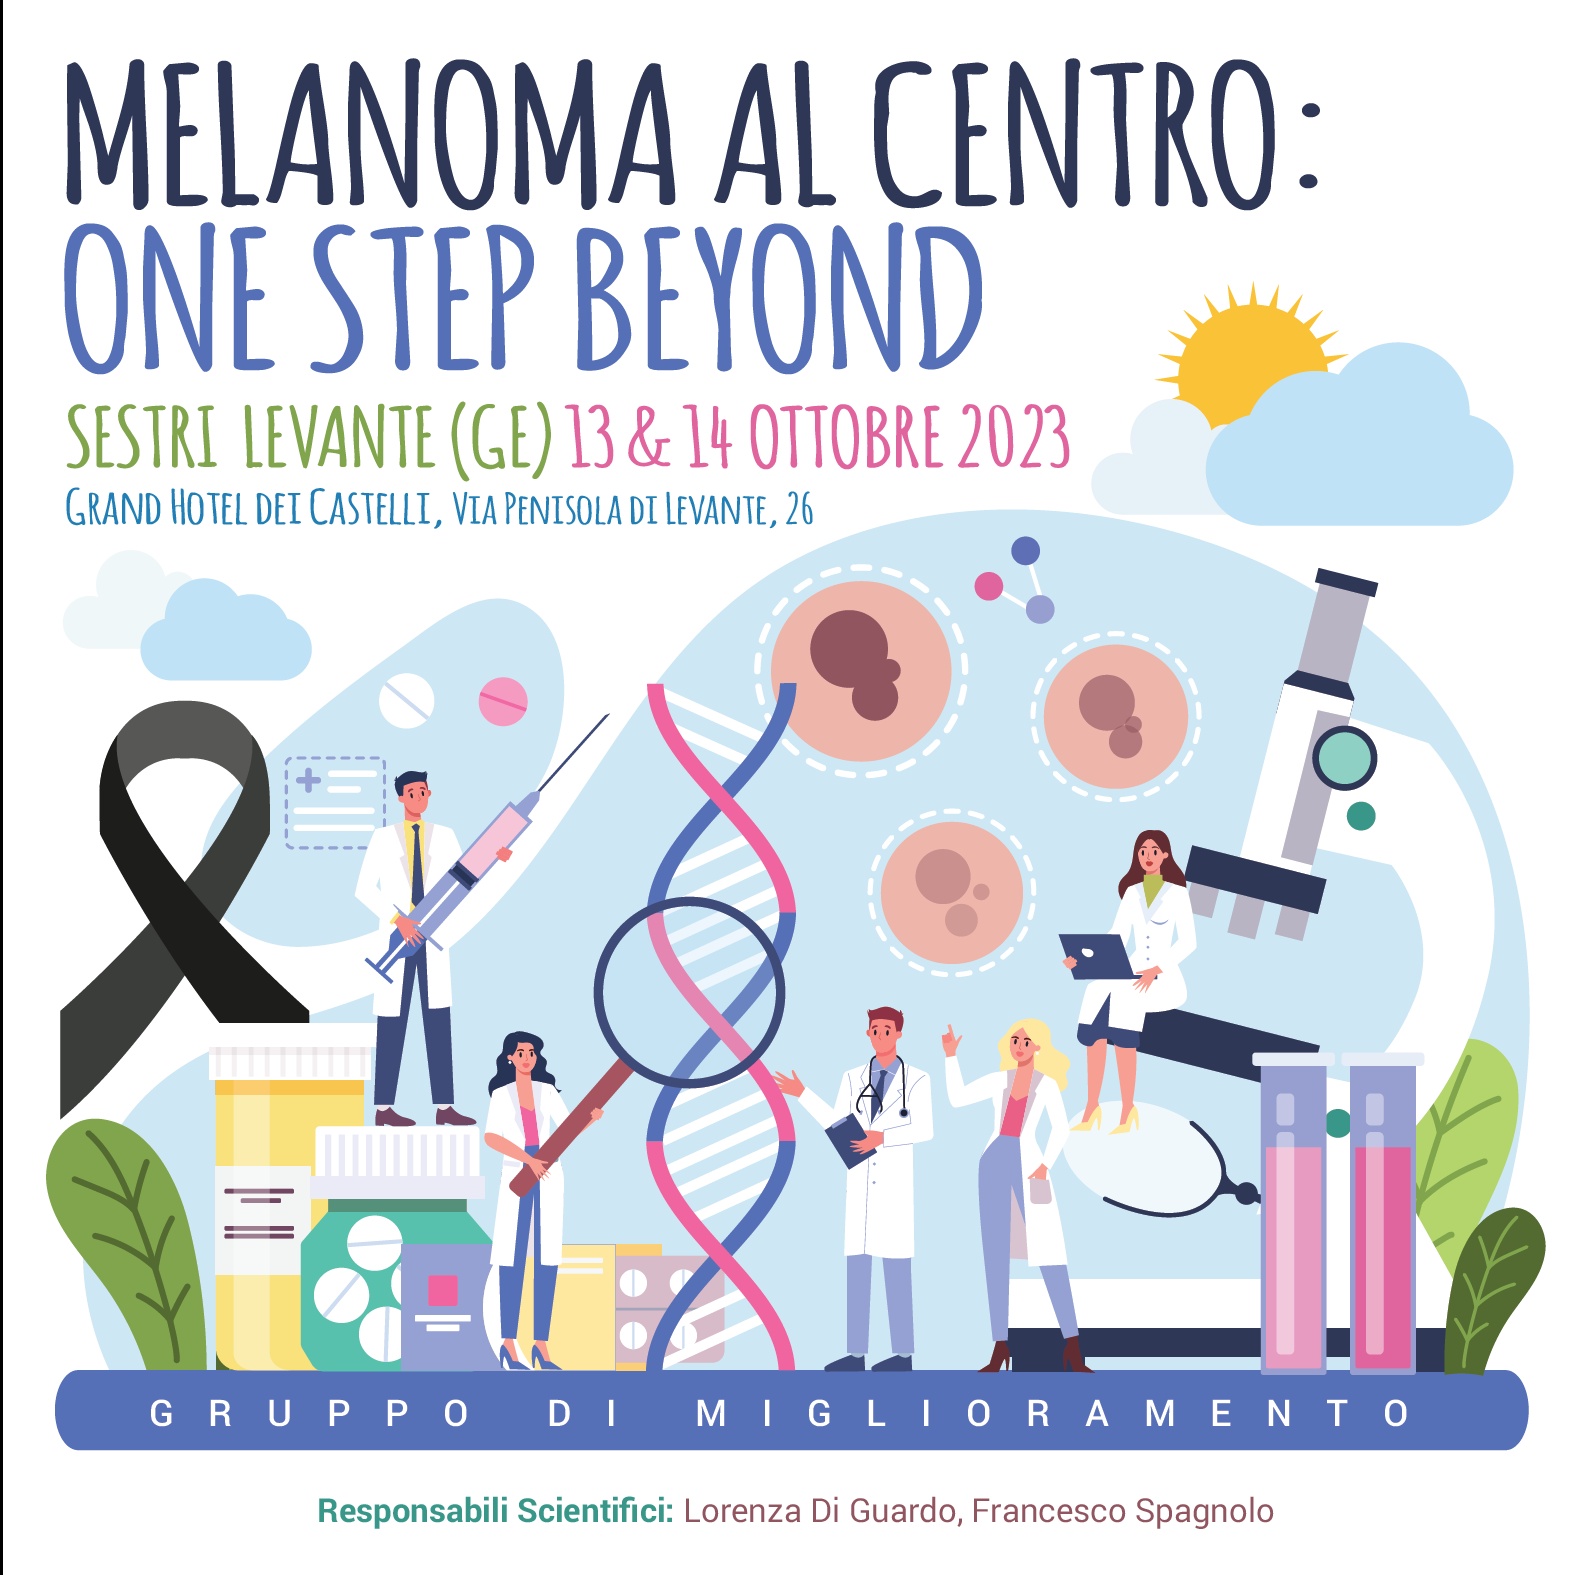 MELANOMA AL CENTRO: ONE STEP BEYOND